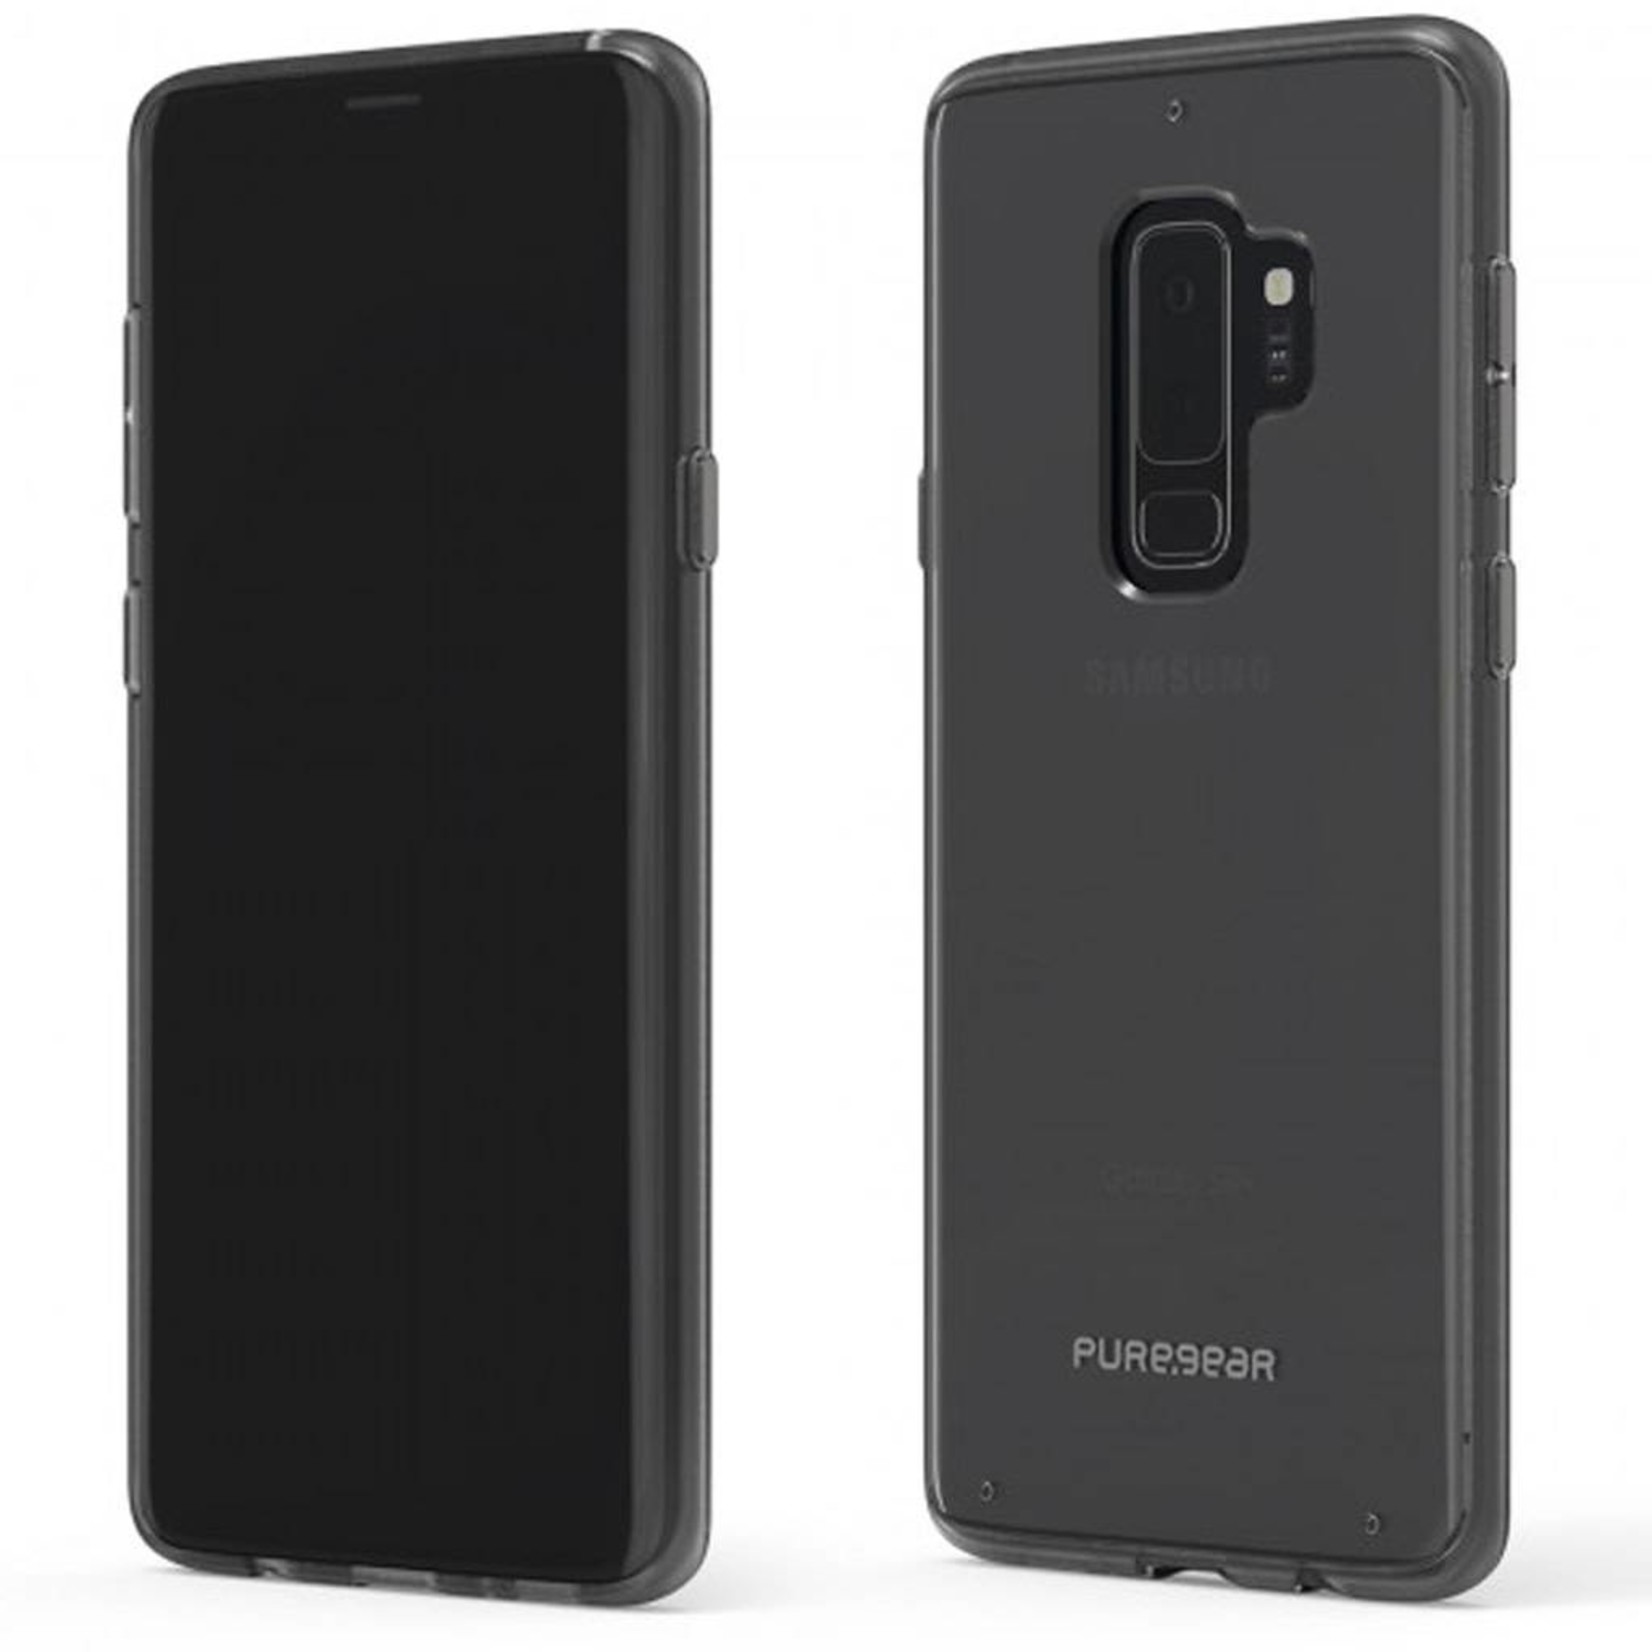 PUREGEAR Slim Shell Clear Case for Galaxy S9 Plus